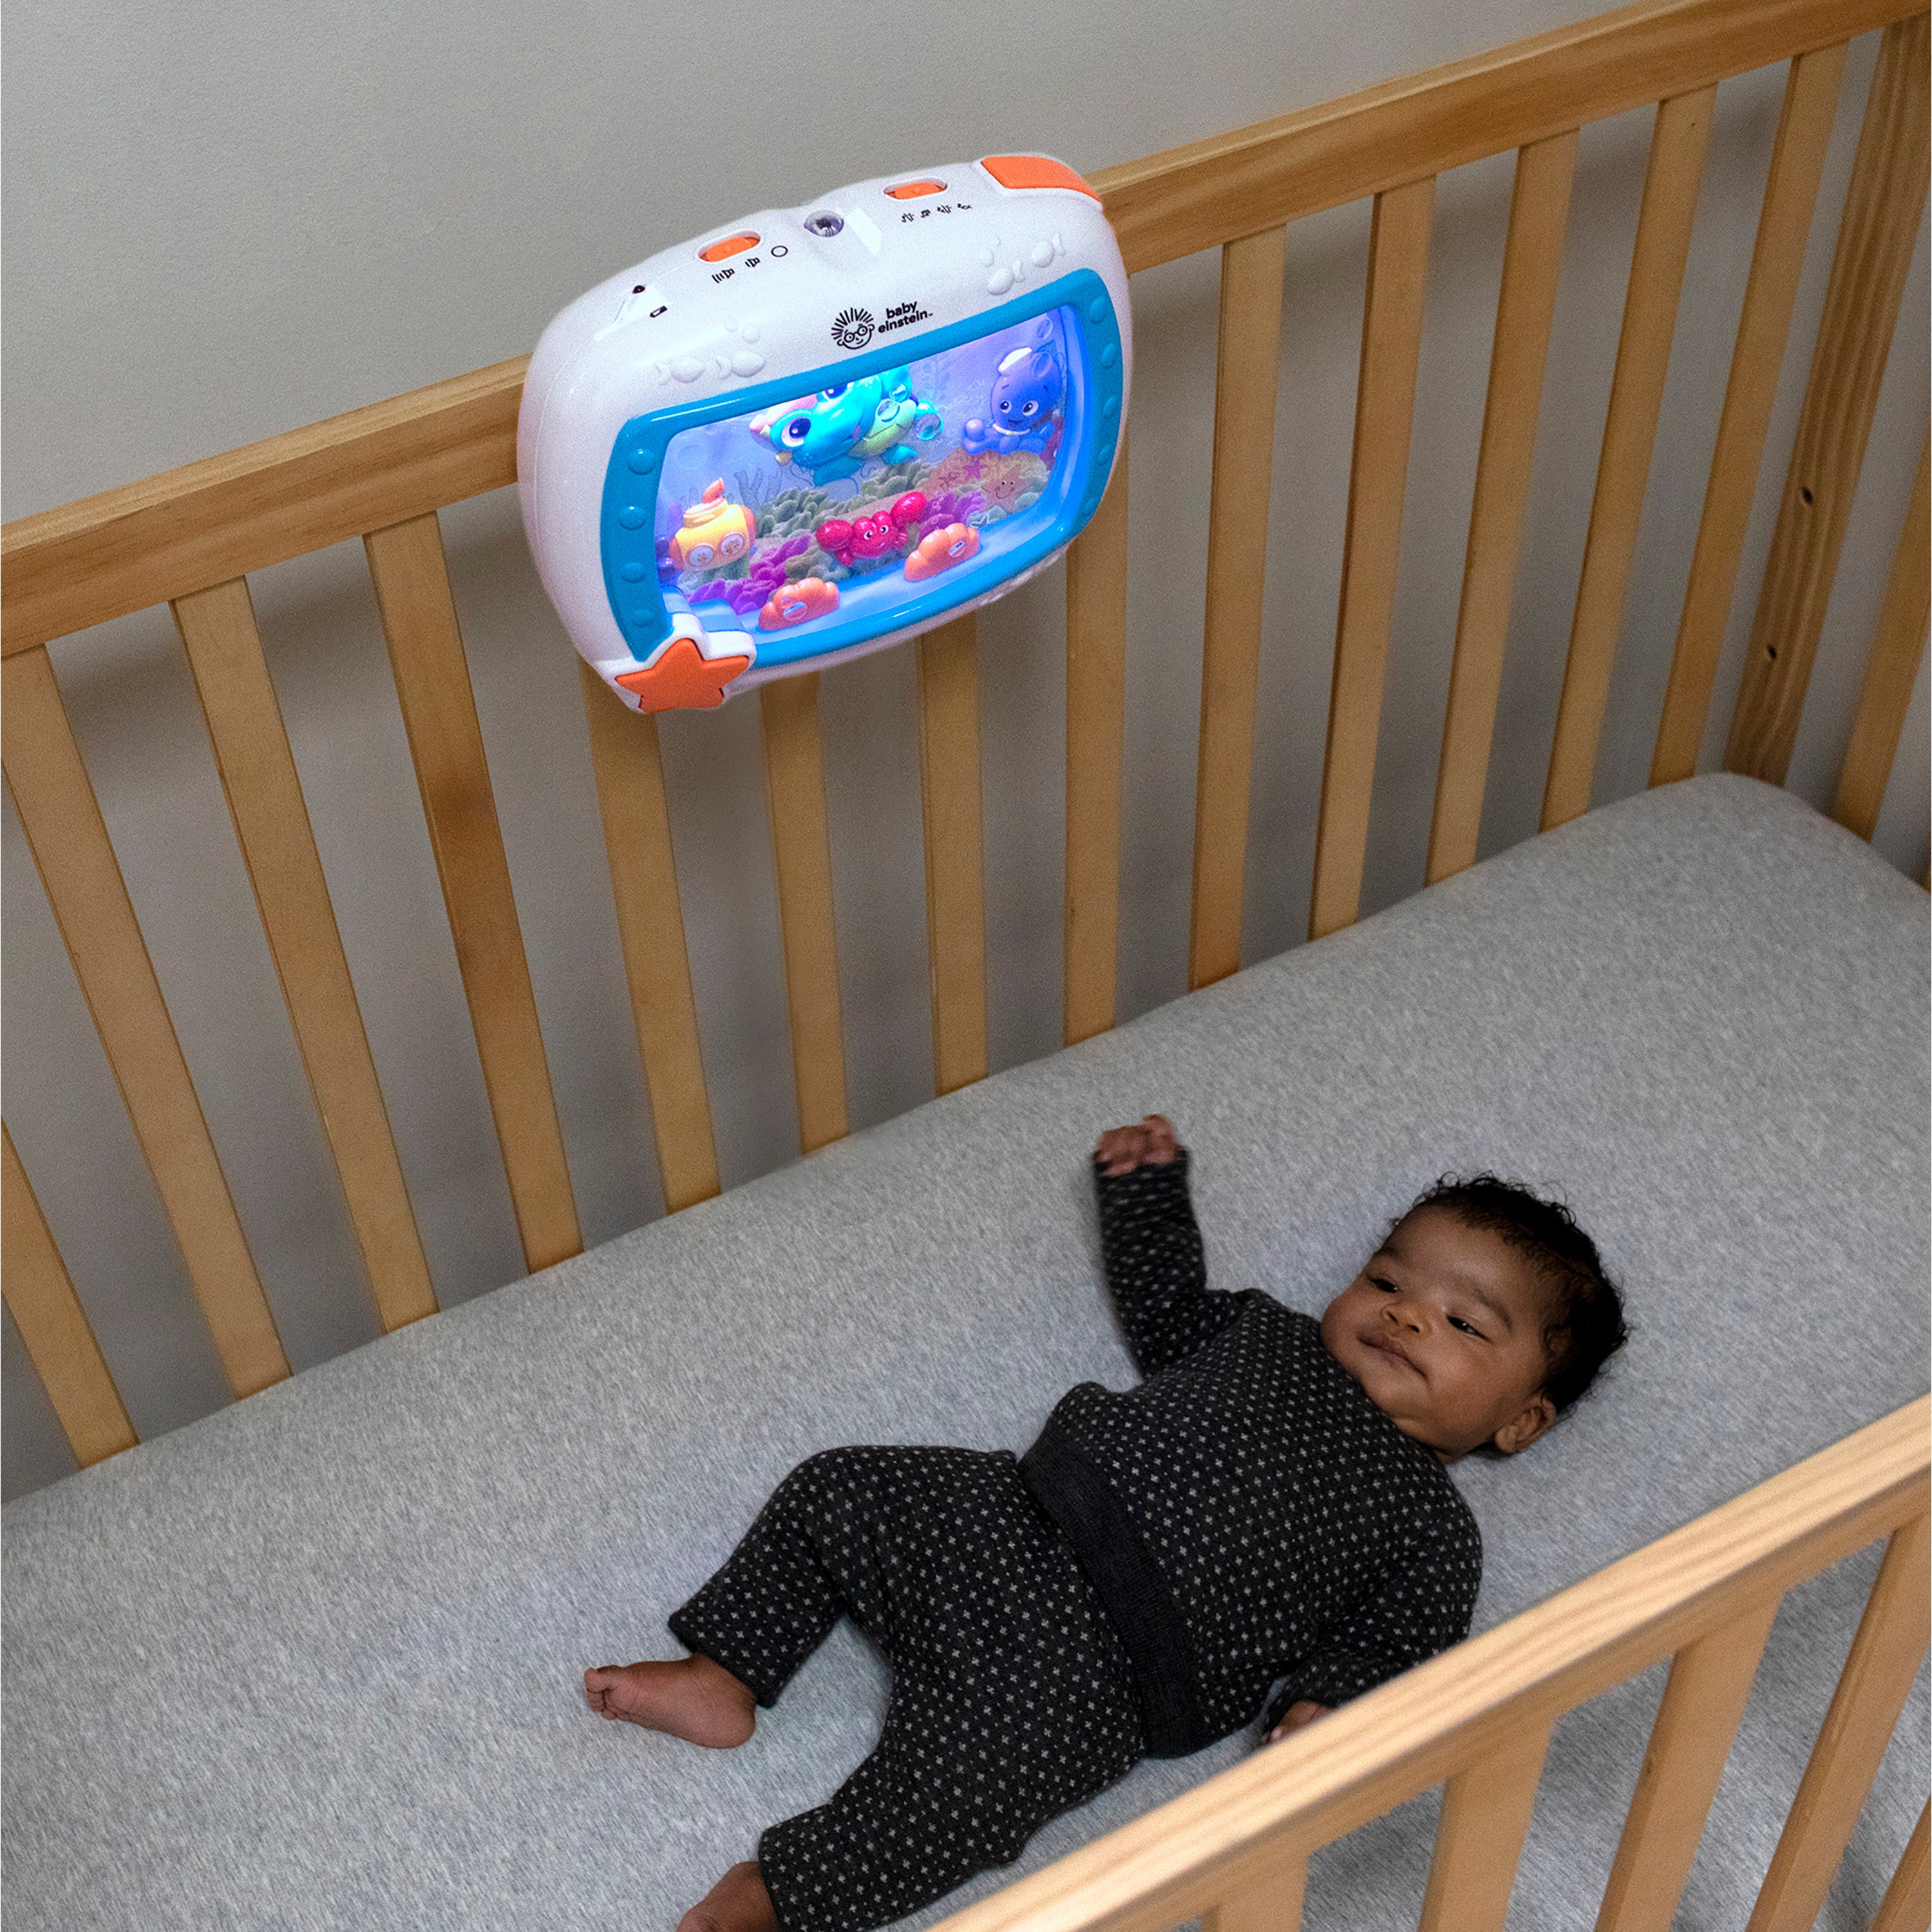 Baby Einstein Sea Dreams Sleep Soother Music Crib Toy Fish Tank Aquarium  Tested